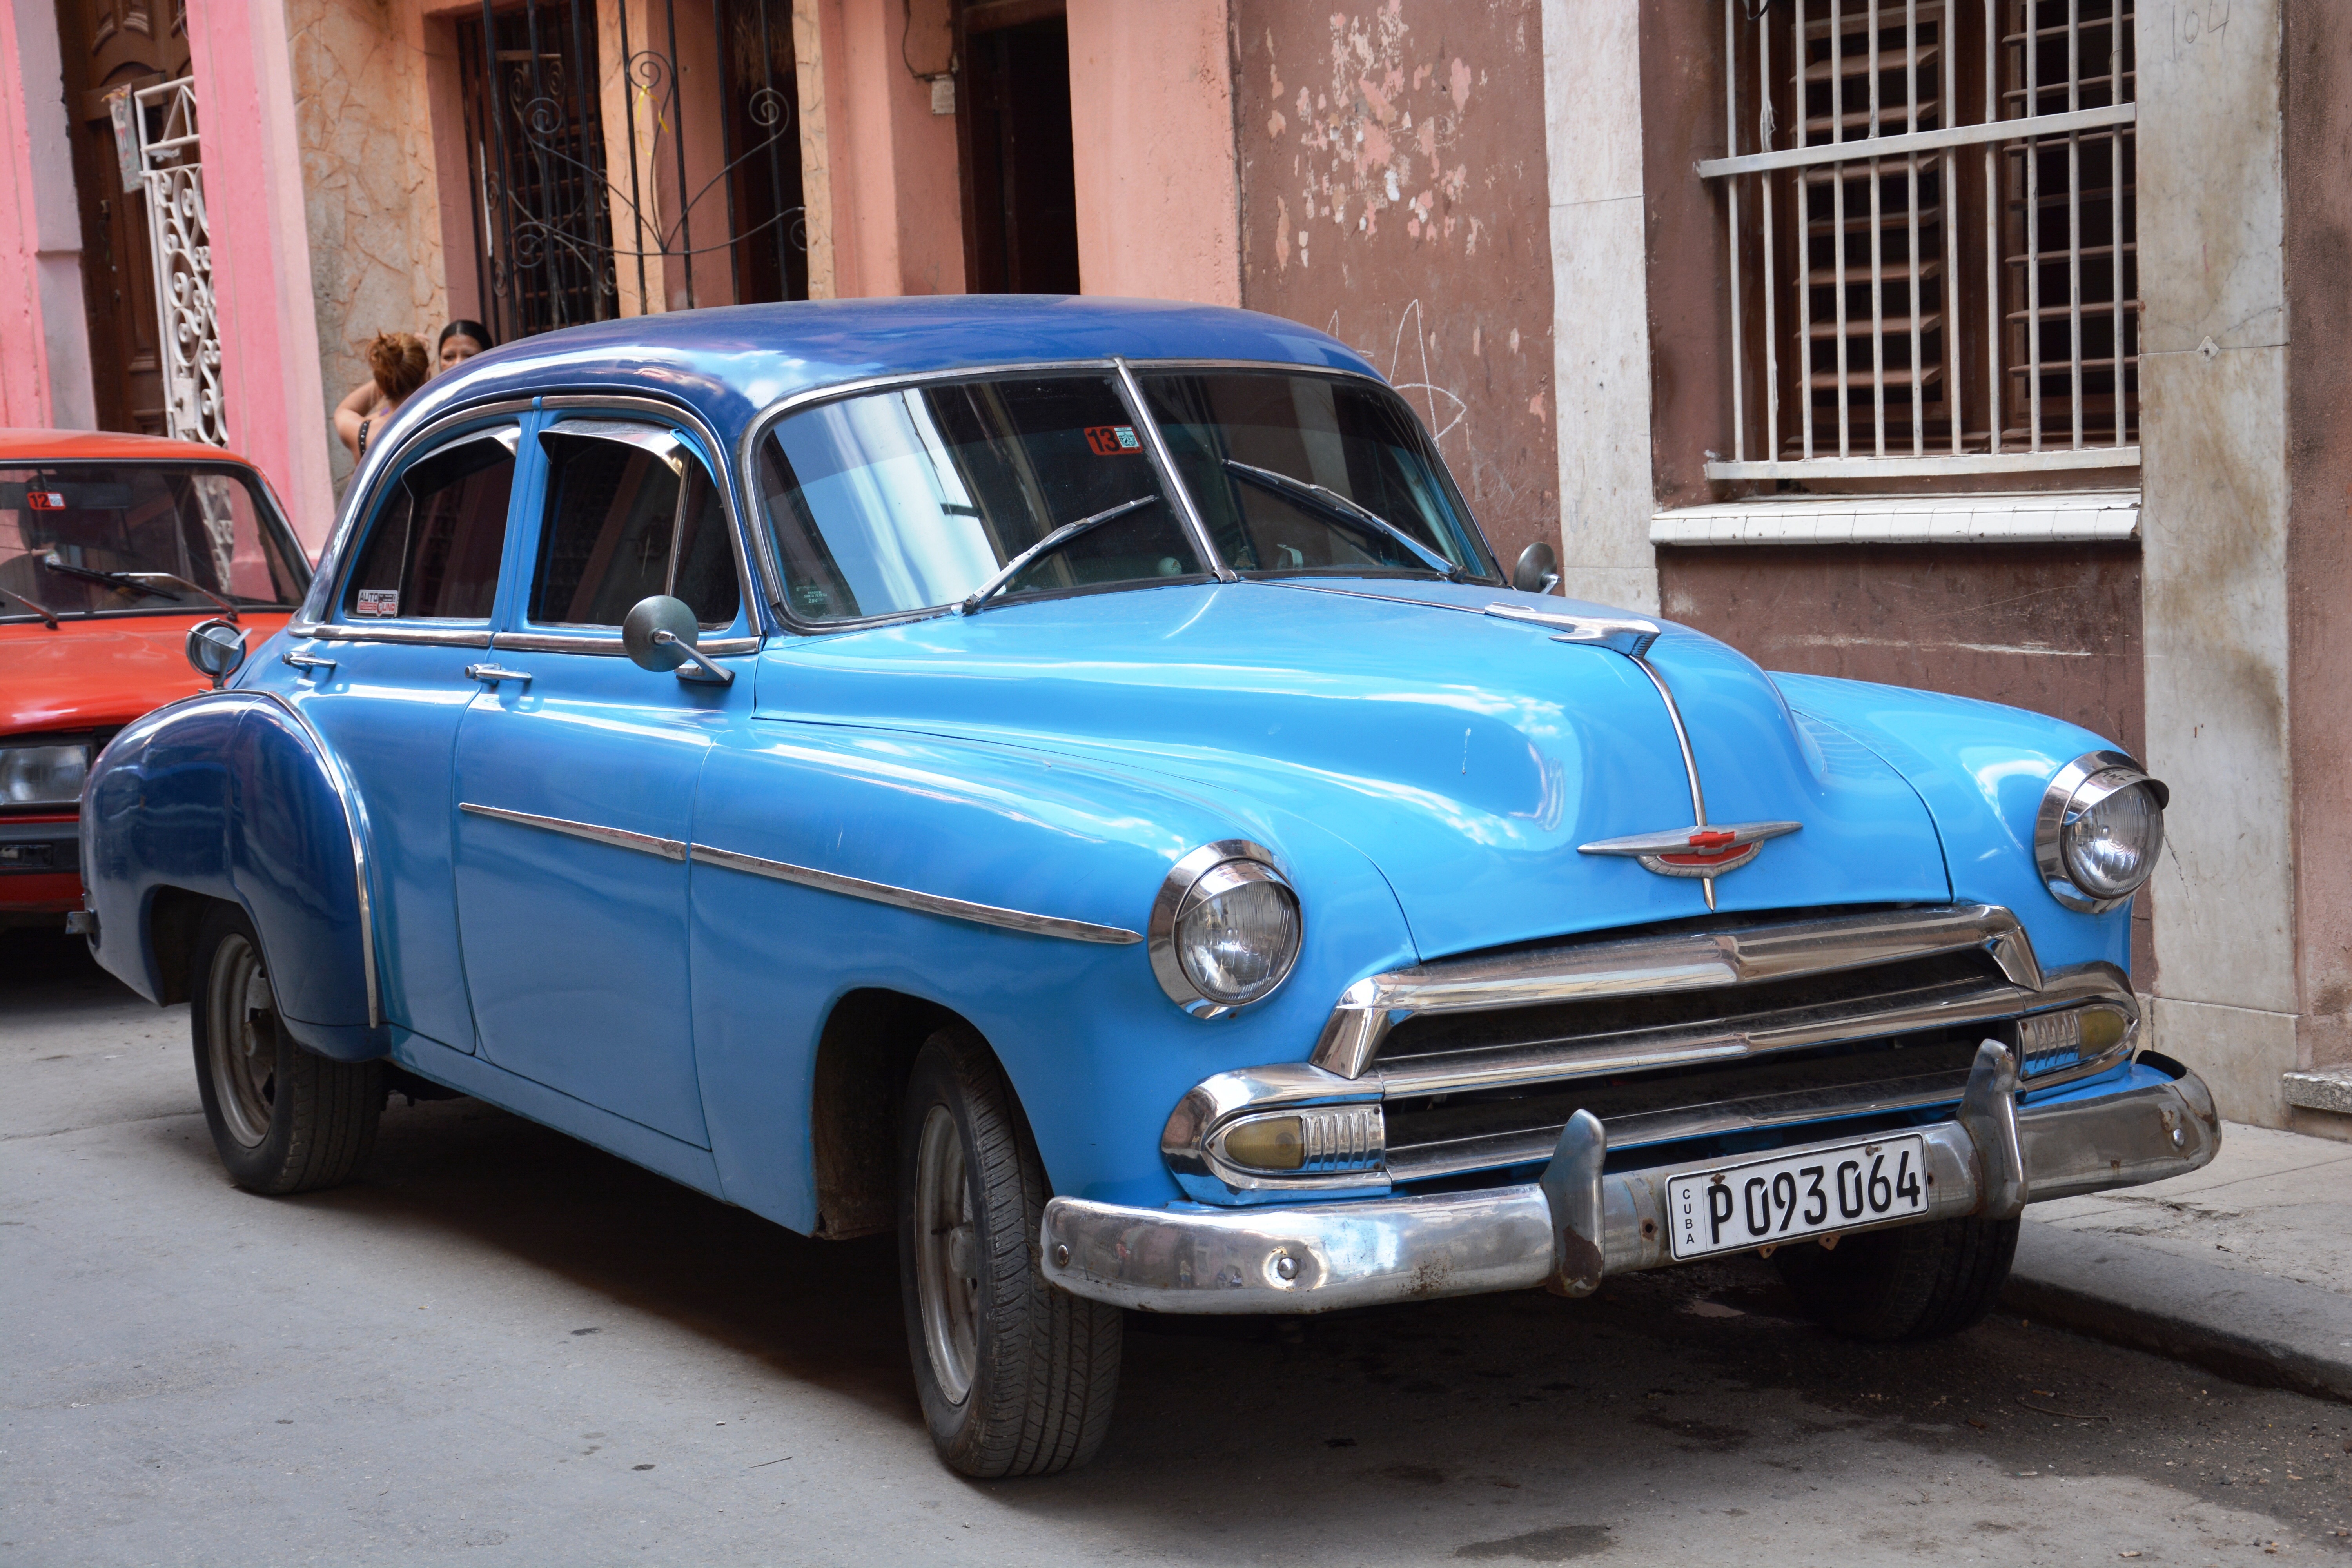 Free photo A 1951 blue Chevrolet in Cuba.